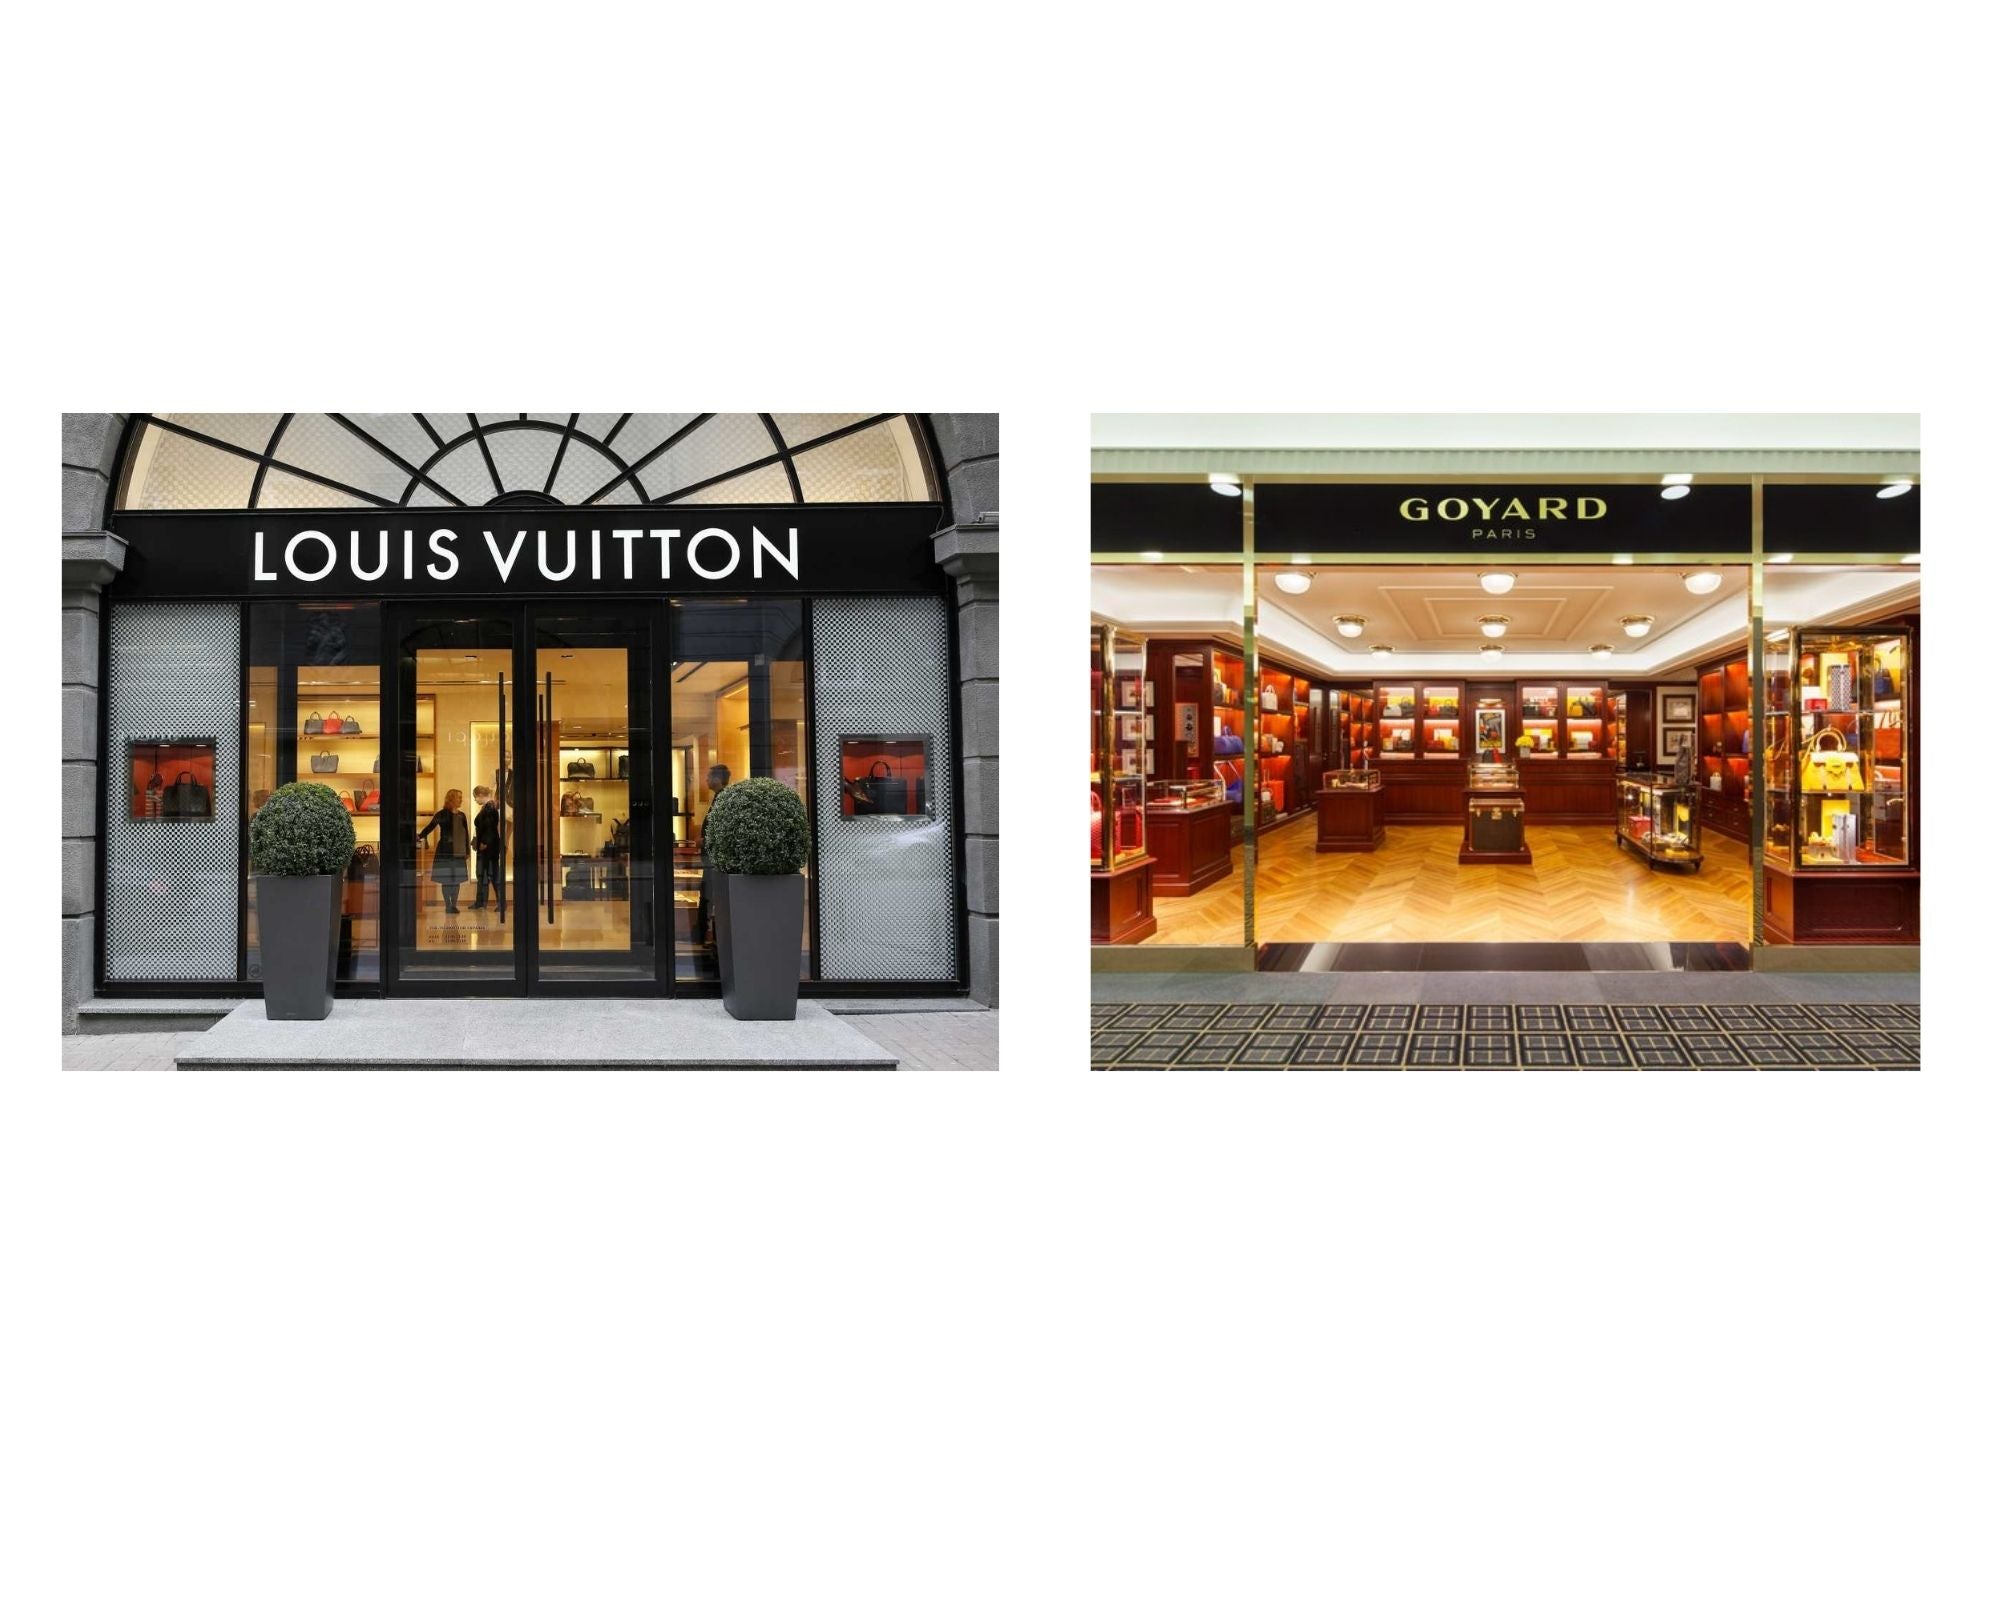 2021 Goyard Price List (USA vs. Paris) - The Luxury Lowdown